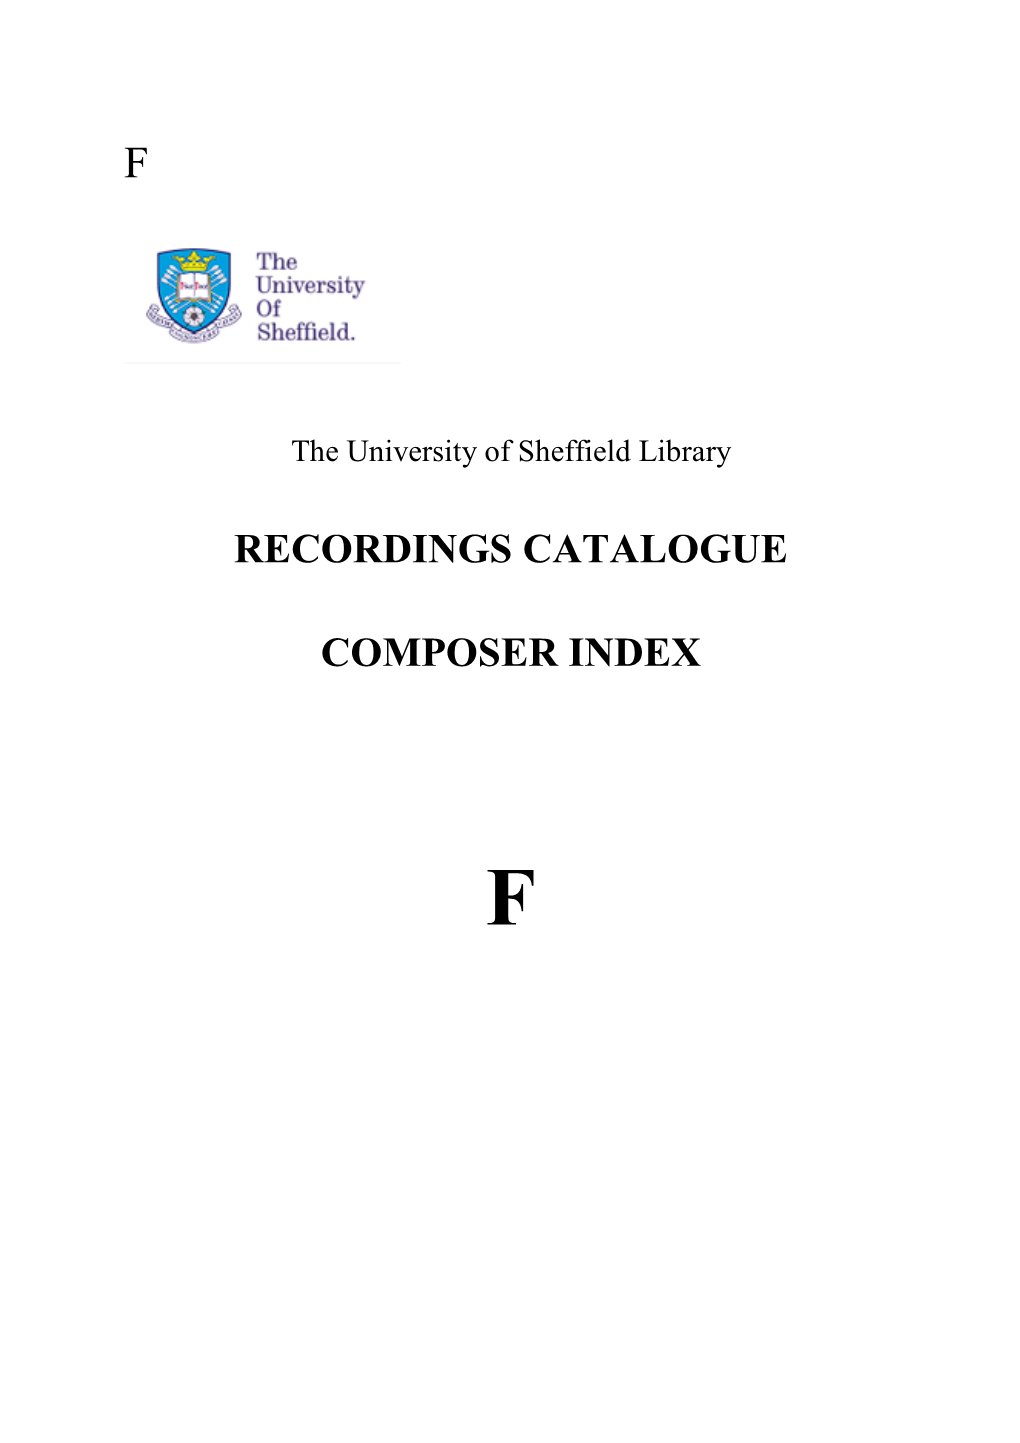 Recordings Catalogue Composer Index